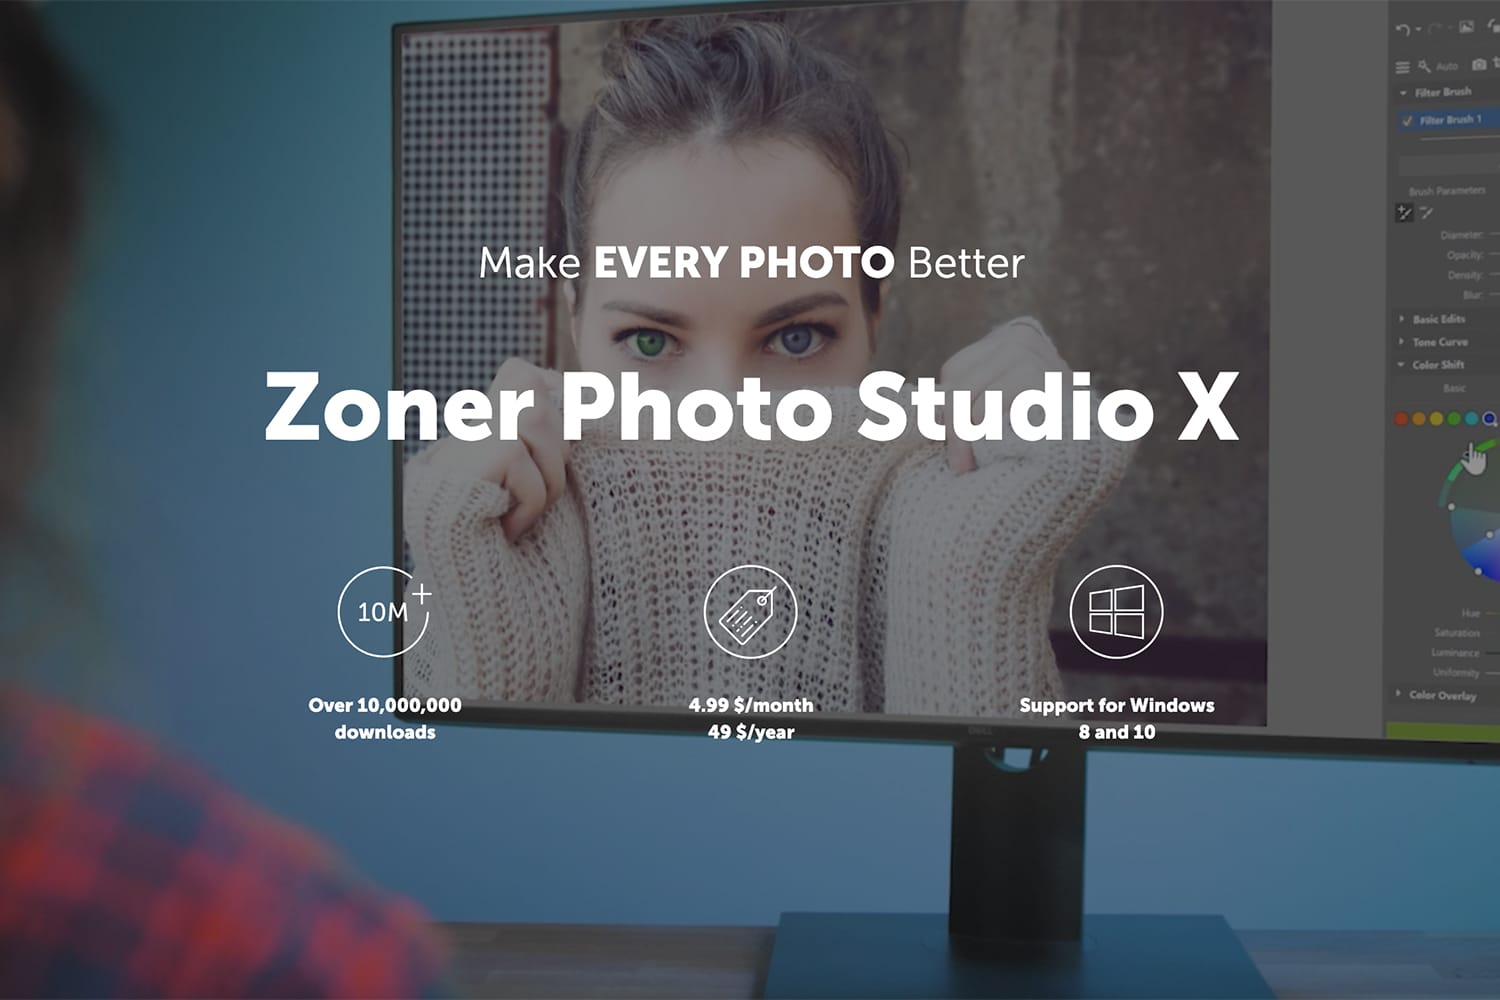 Zoner Photo Studio X 19.2309.2.506 instal the new version for iphone